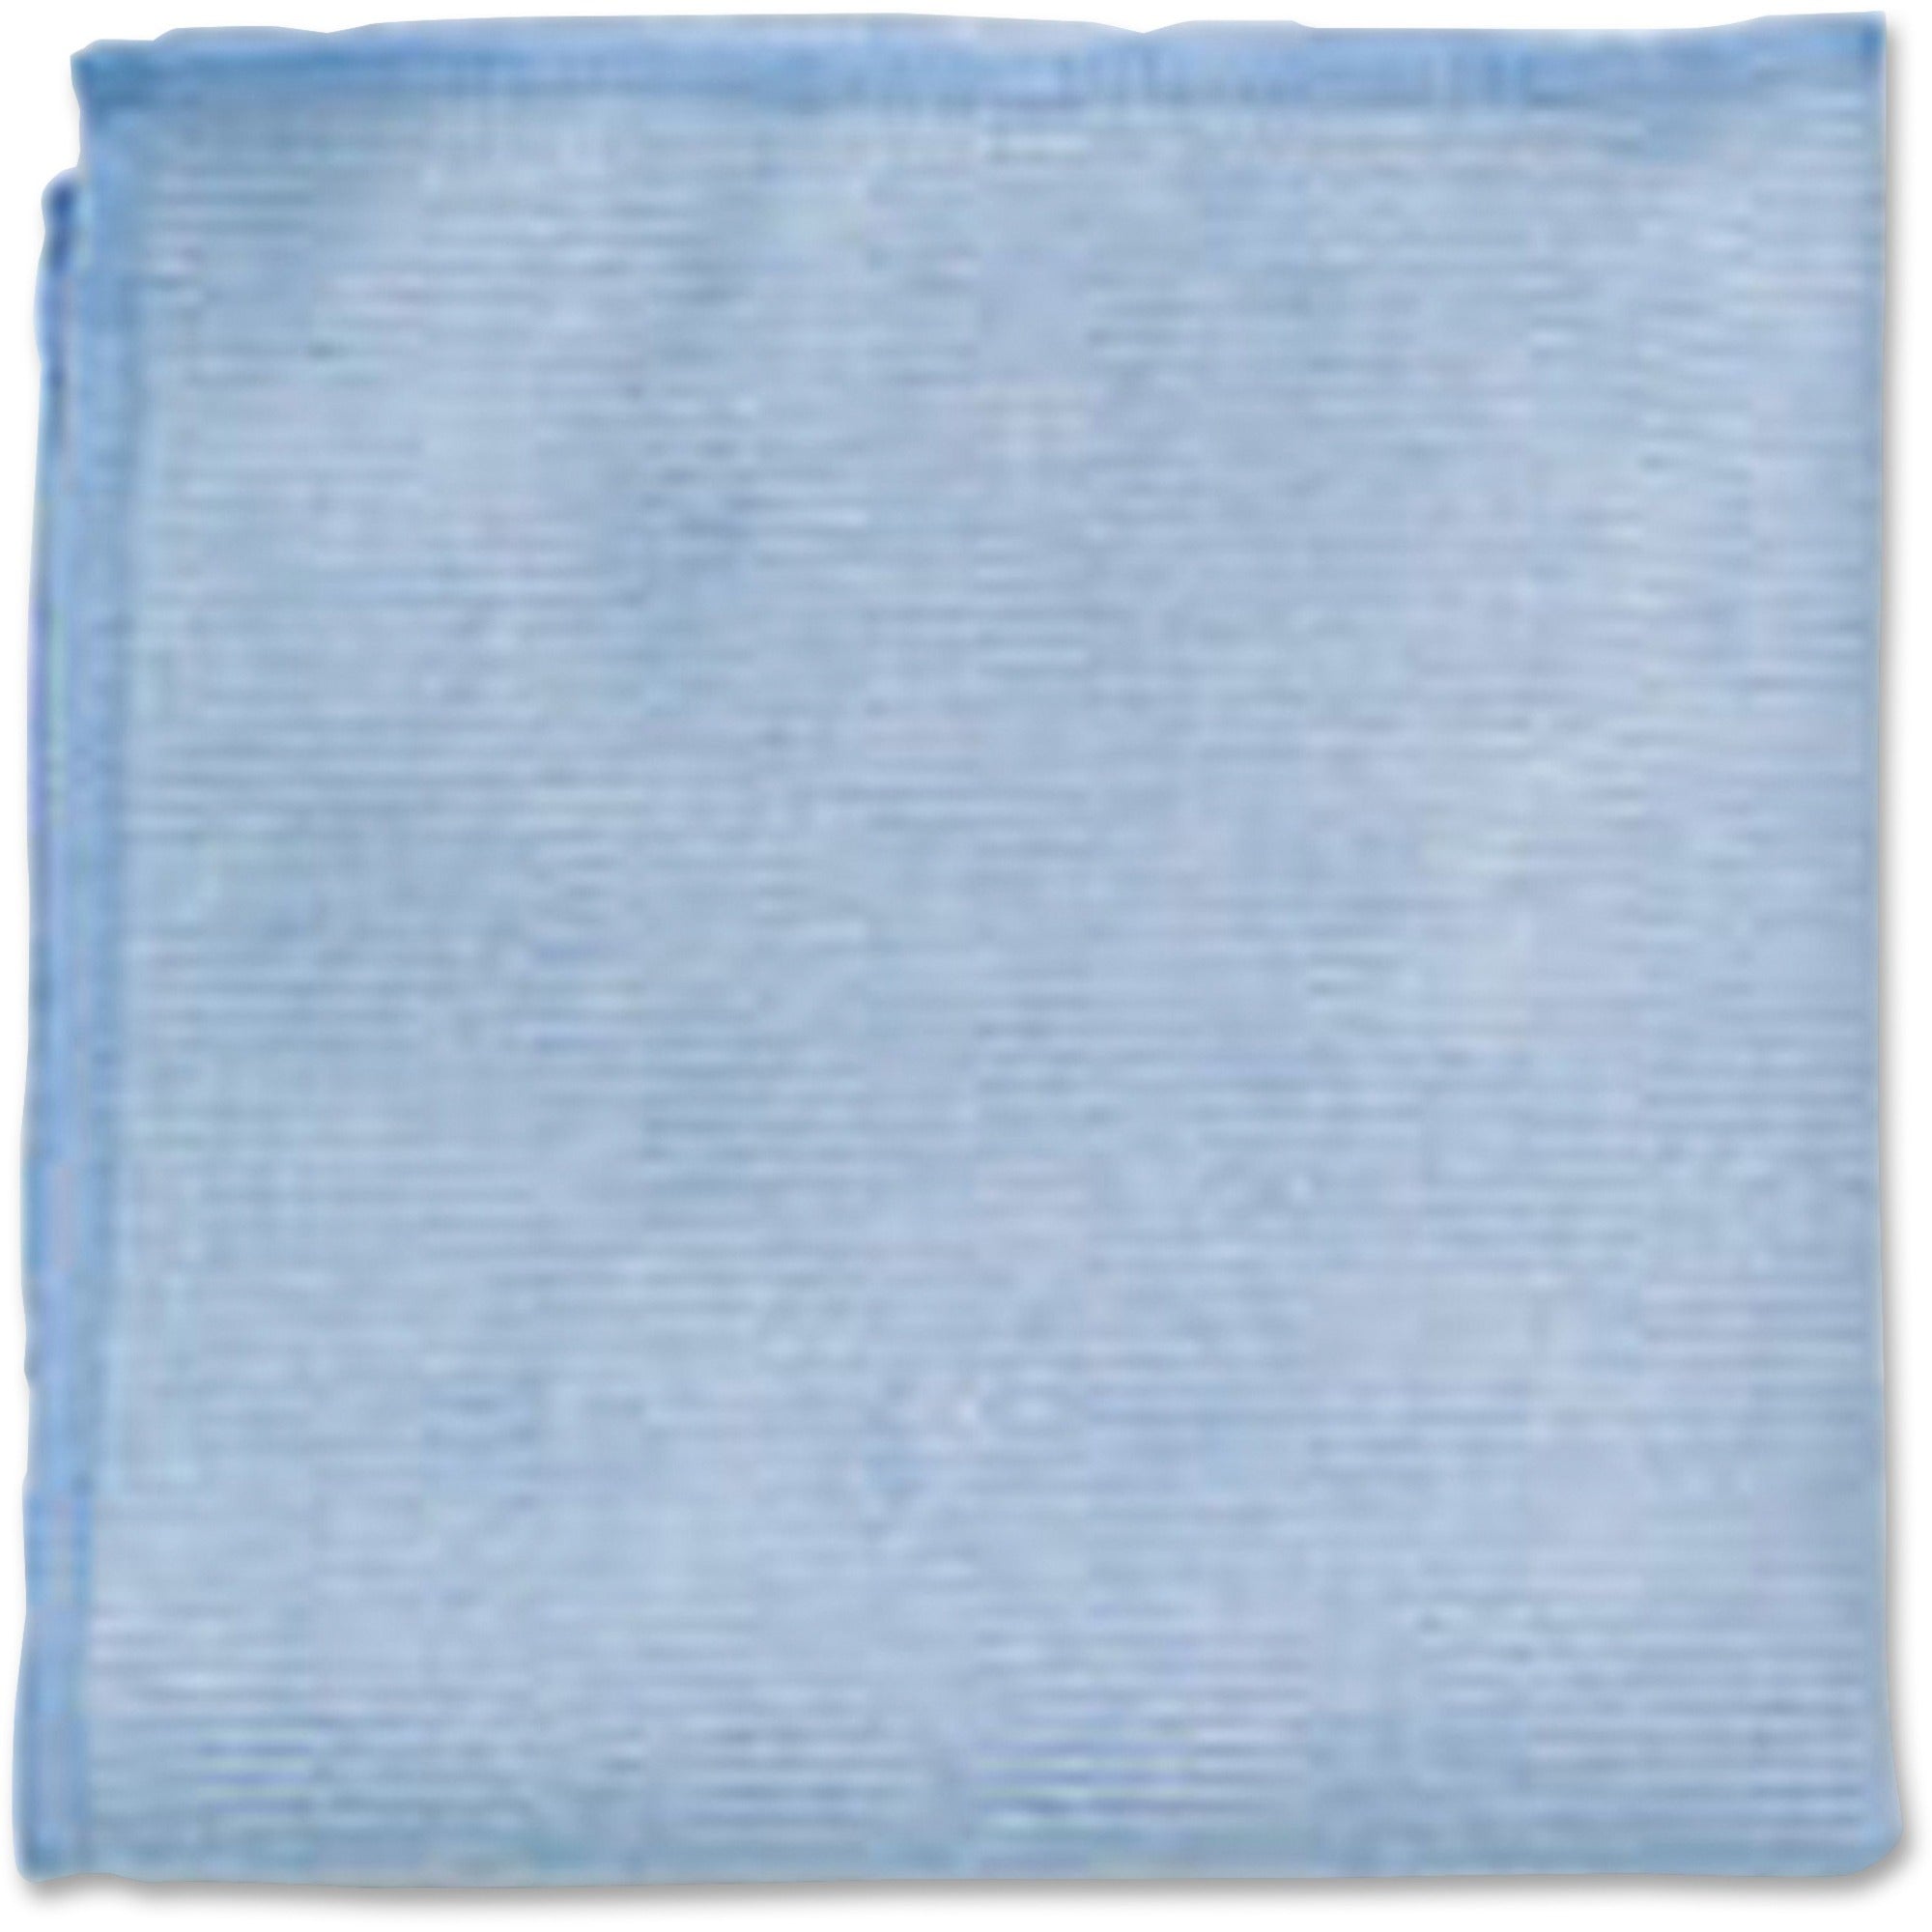 Rubbermaid Commercial Microfiber Light-Duty Cleaning Cloths - For Commercial - 16" Length x 16" Width - 24.0 / Bag - 12 / Carton - Bleach-safe, Washable, Durable, Chemical Resistant, Reusable - Blue